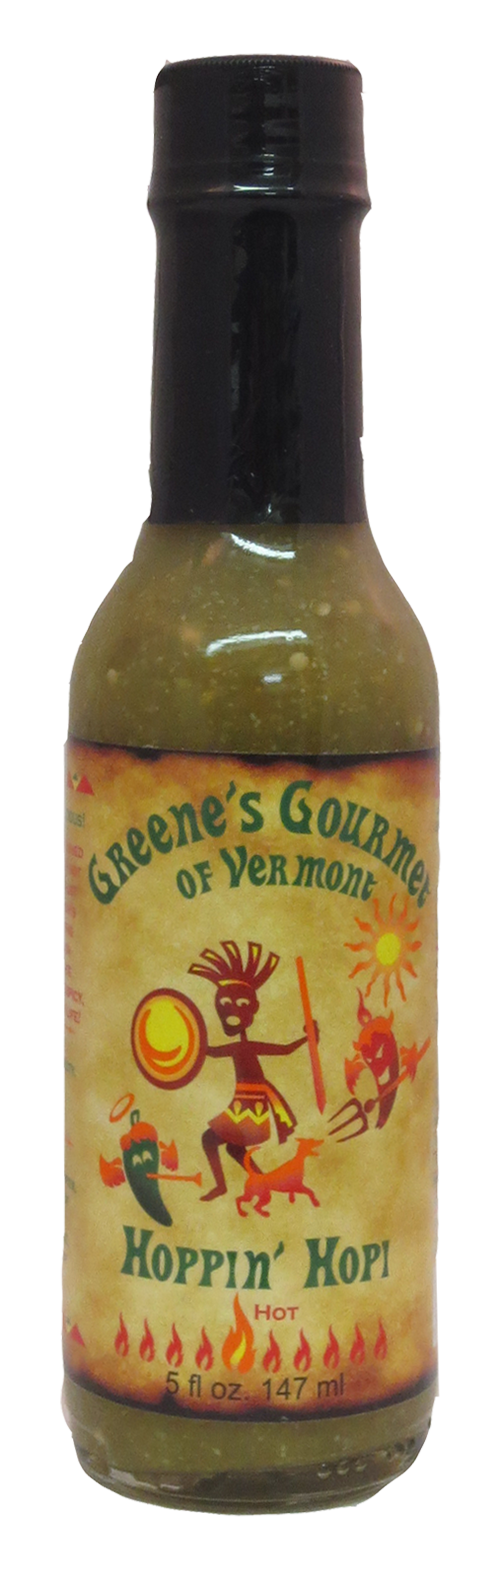 Greene's Gourmet Hoppin' Jalapeno Horseradish Hot Sauce